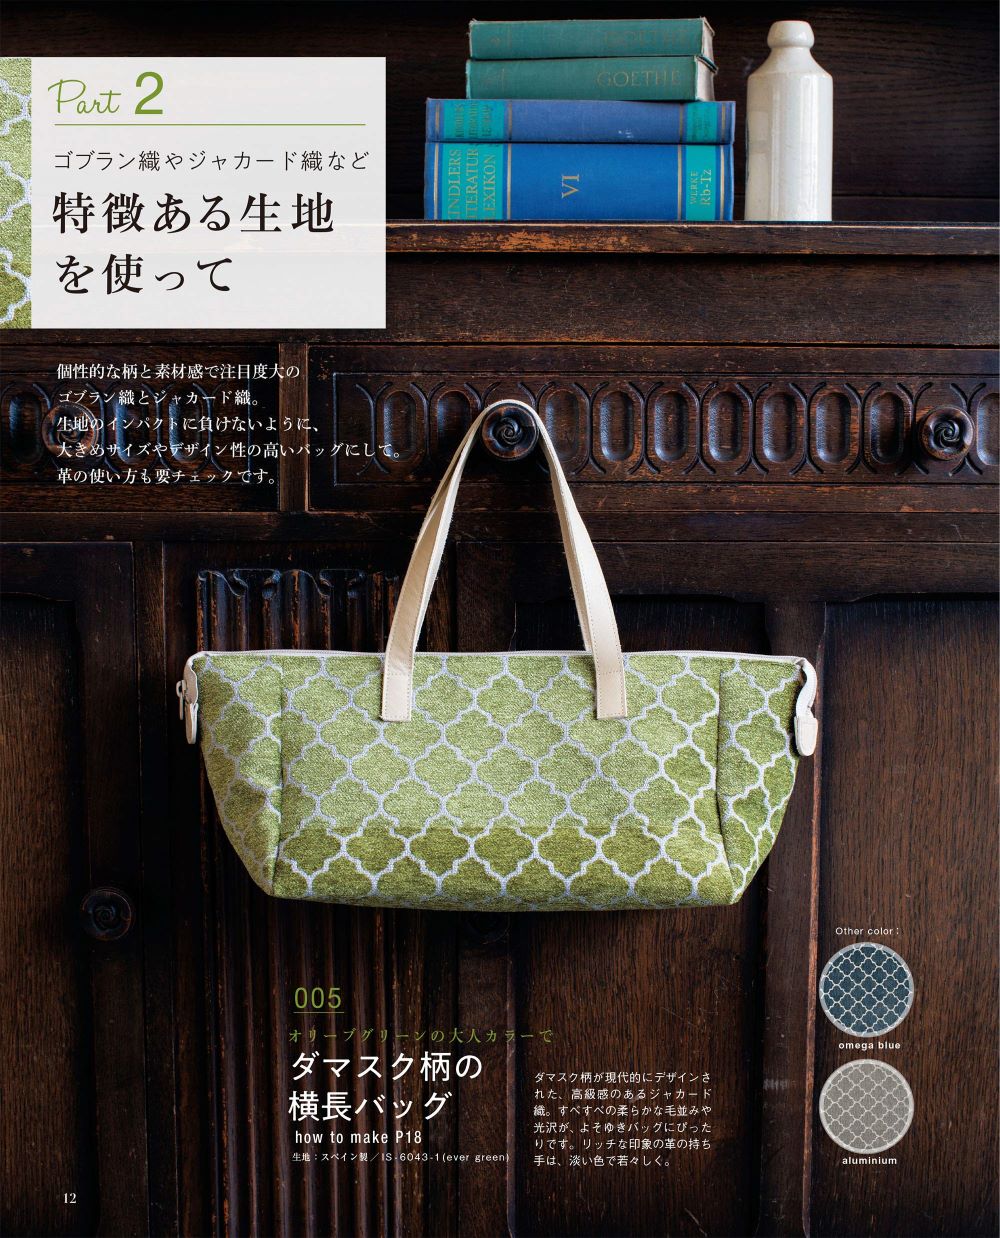 Kamakura Suwanee adult style bag (from the basics)